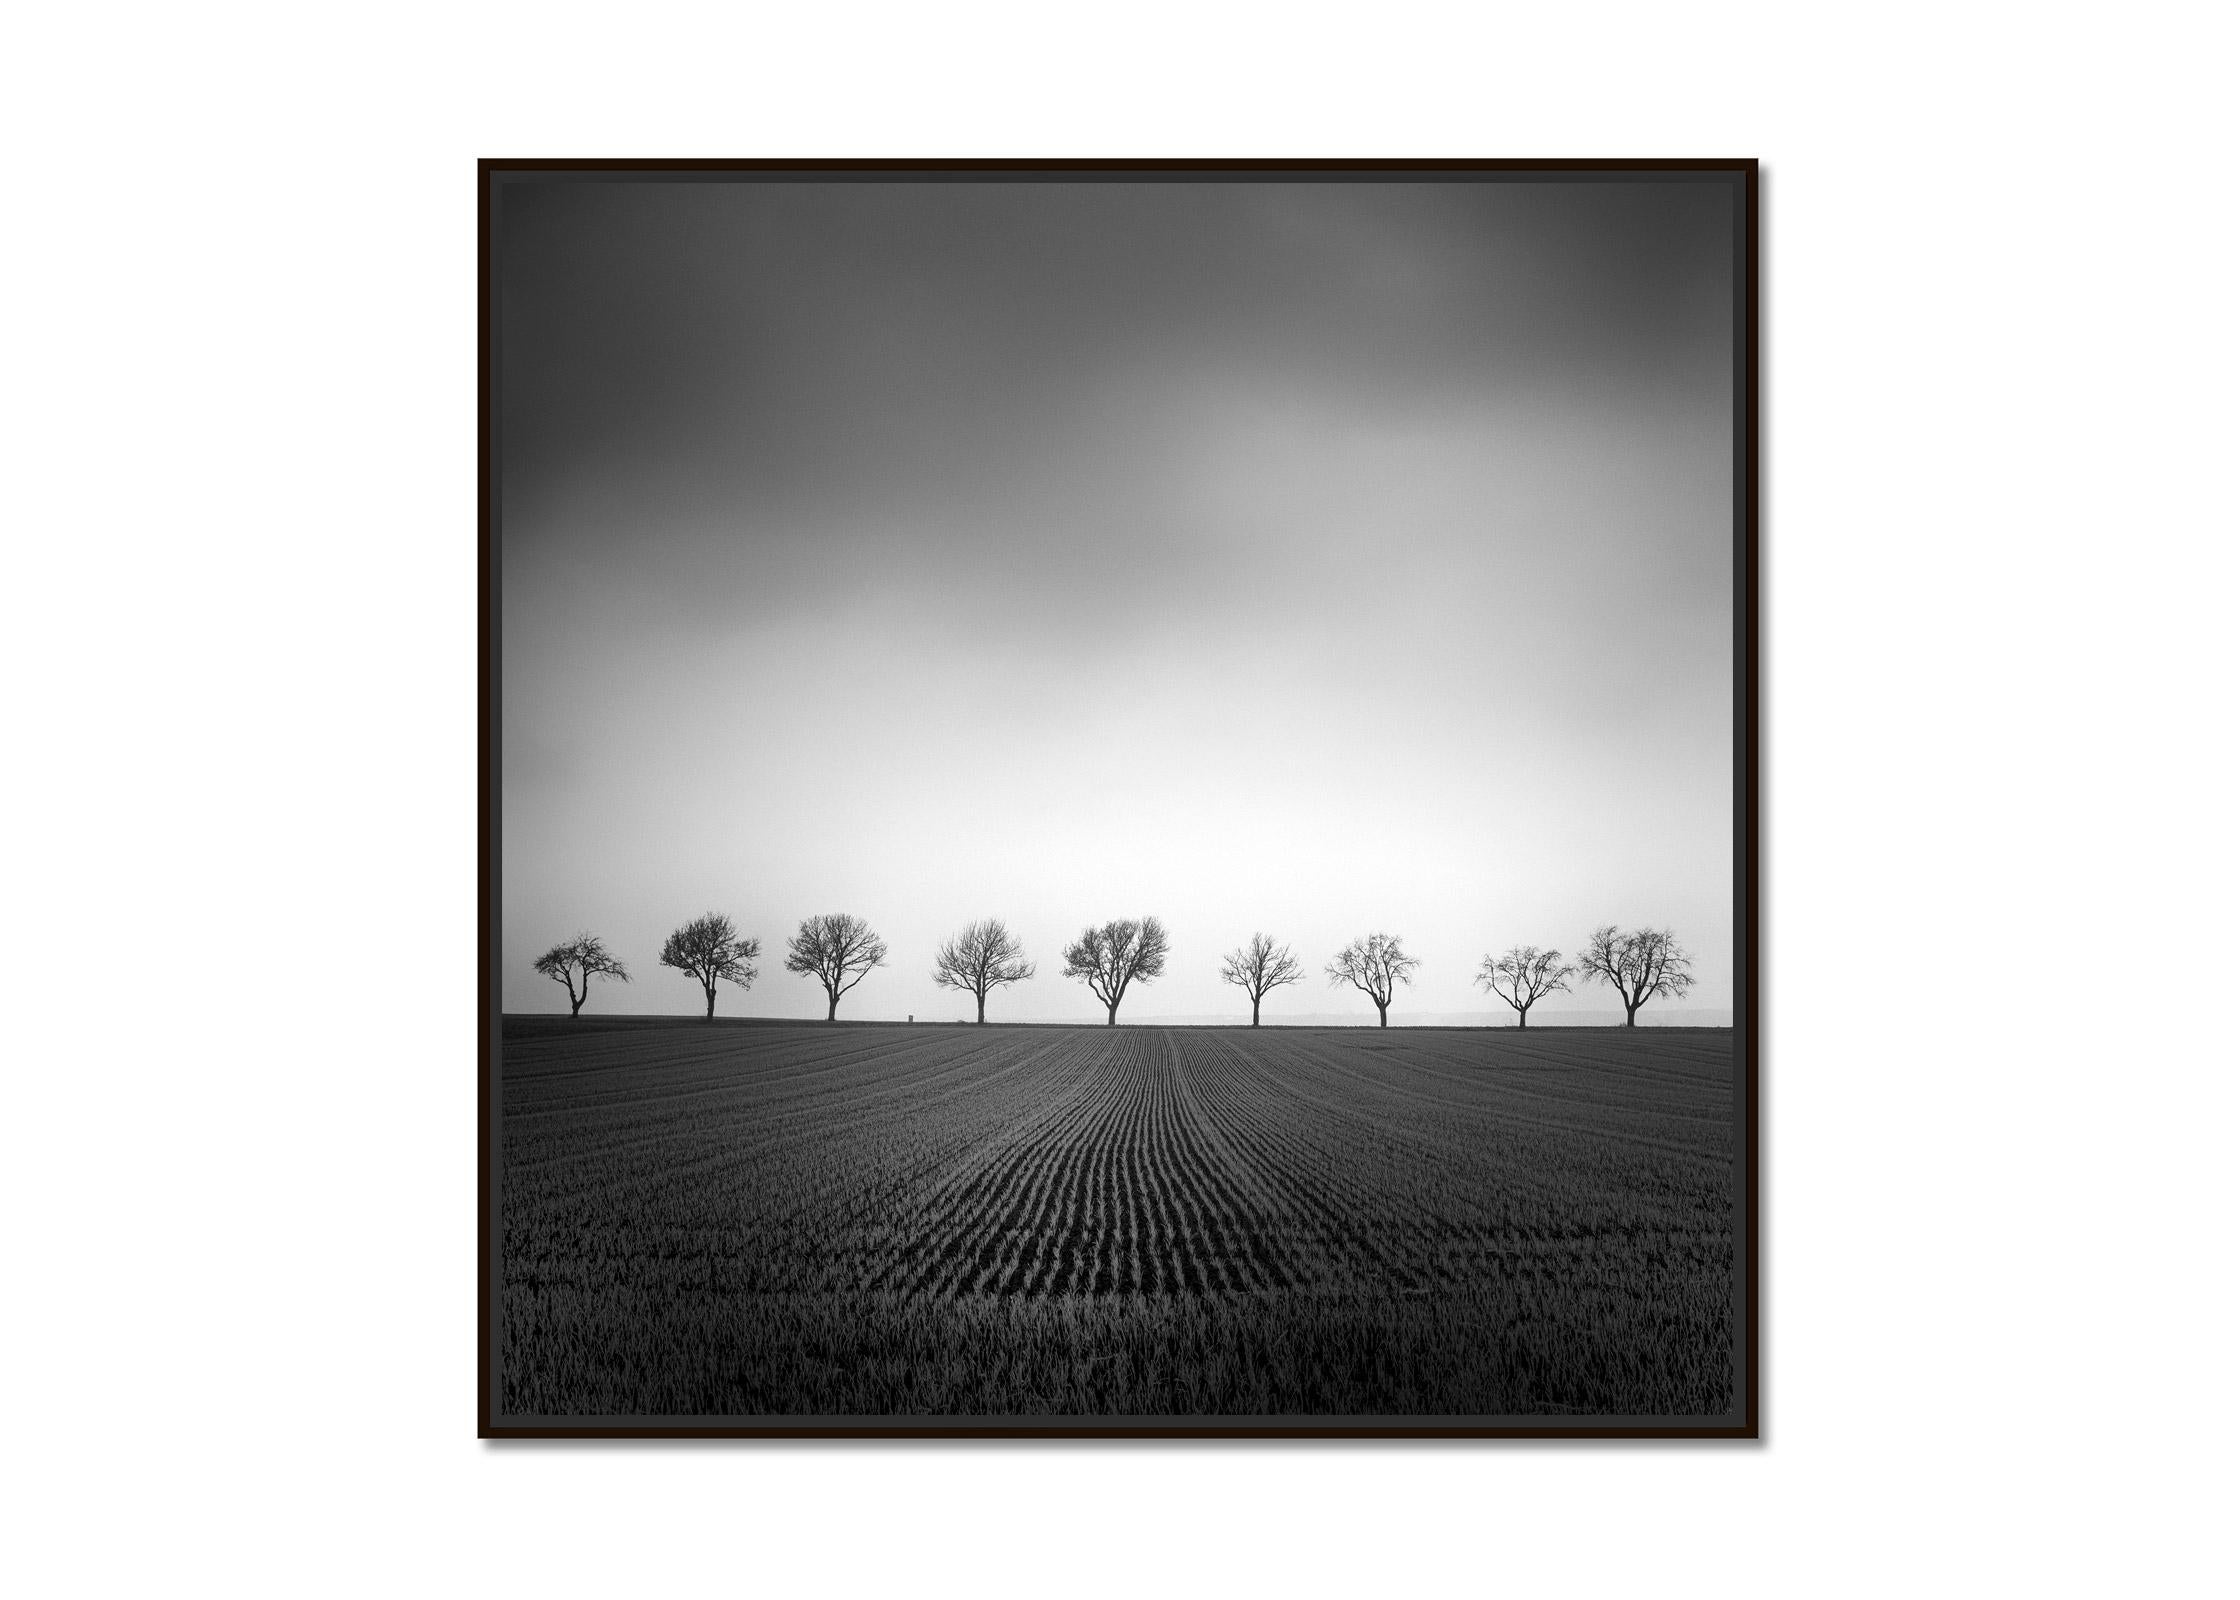 Nine Cherry Trees Corn Field black & white fine art landscape photography print - Photograph by Gerald Berghammer